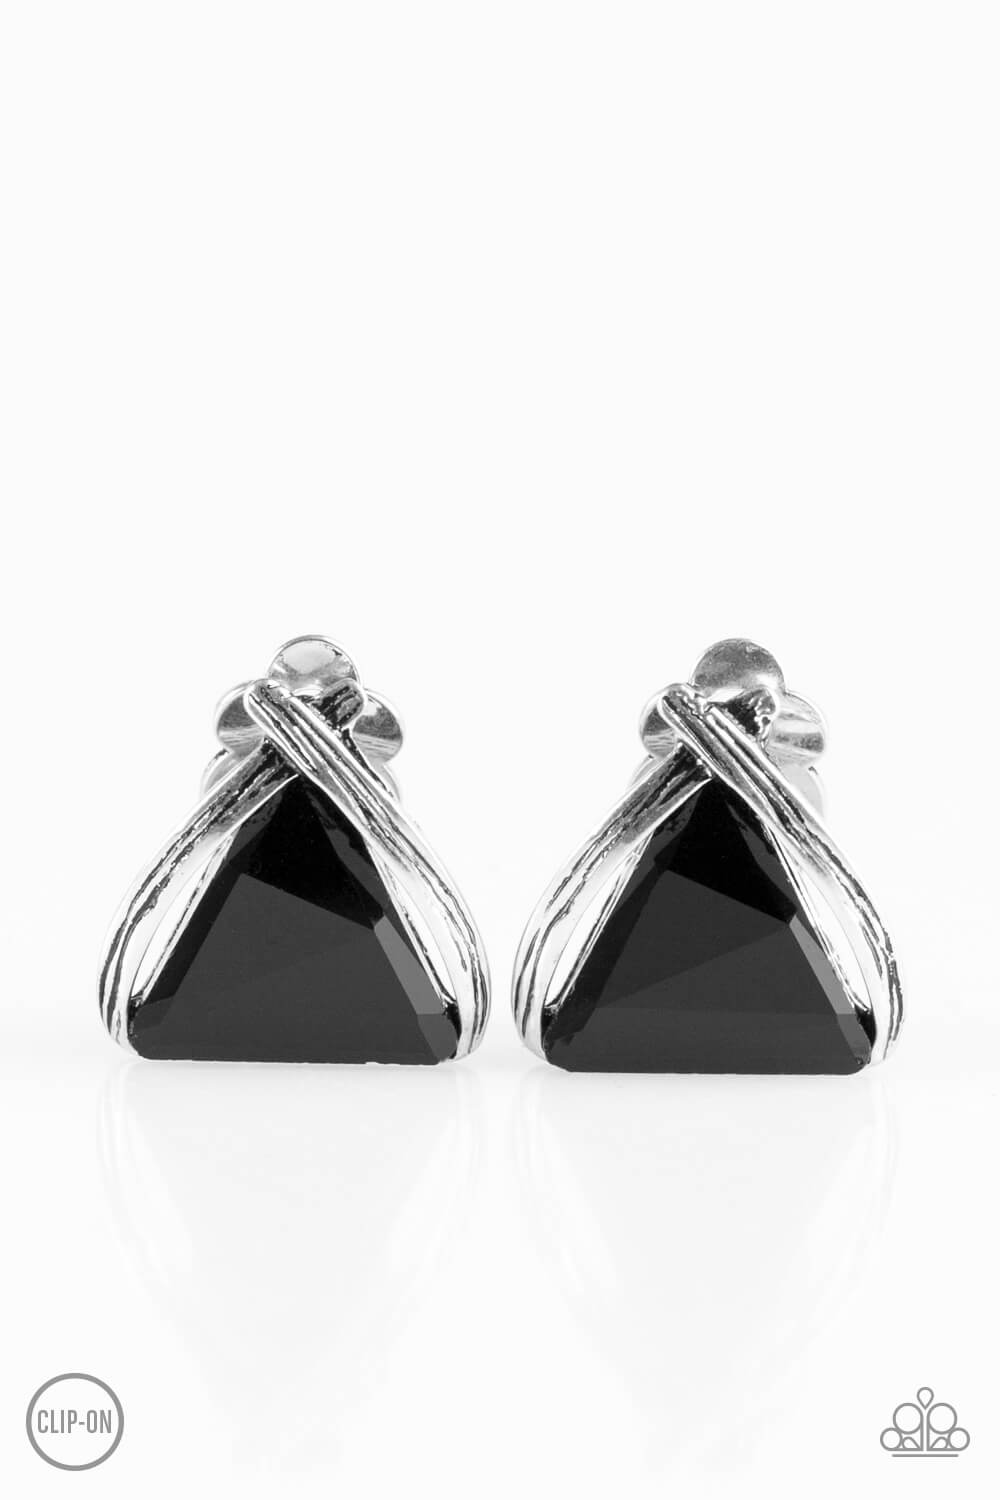 Elegant Edge - Black Clip-On Earrings - Princess Glam Shop